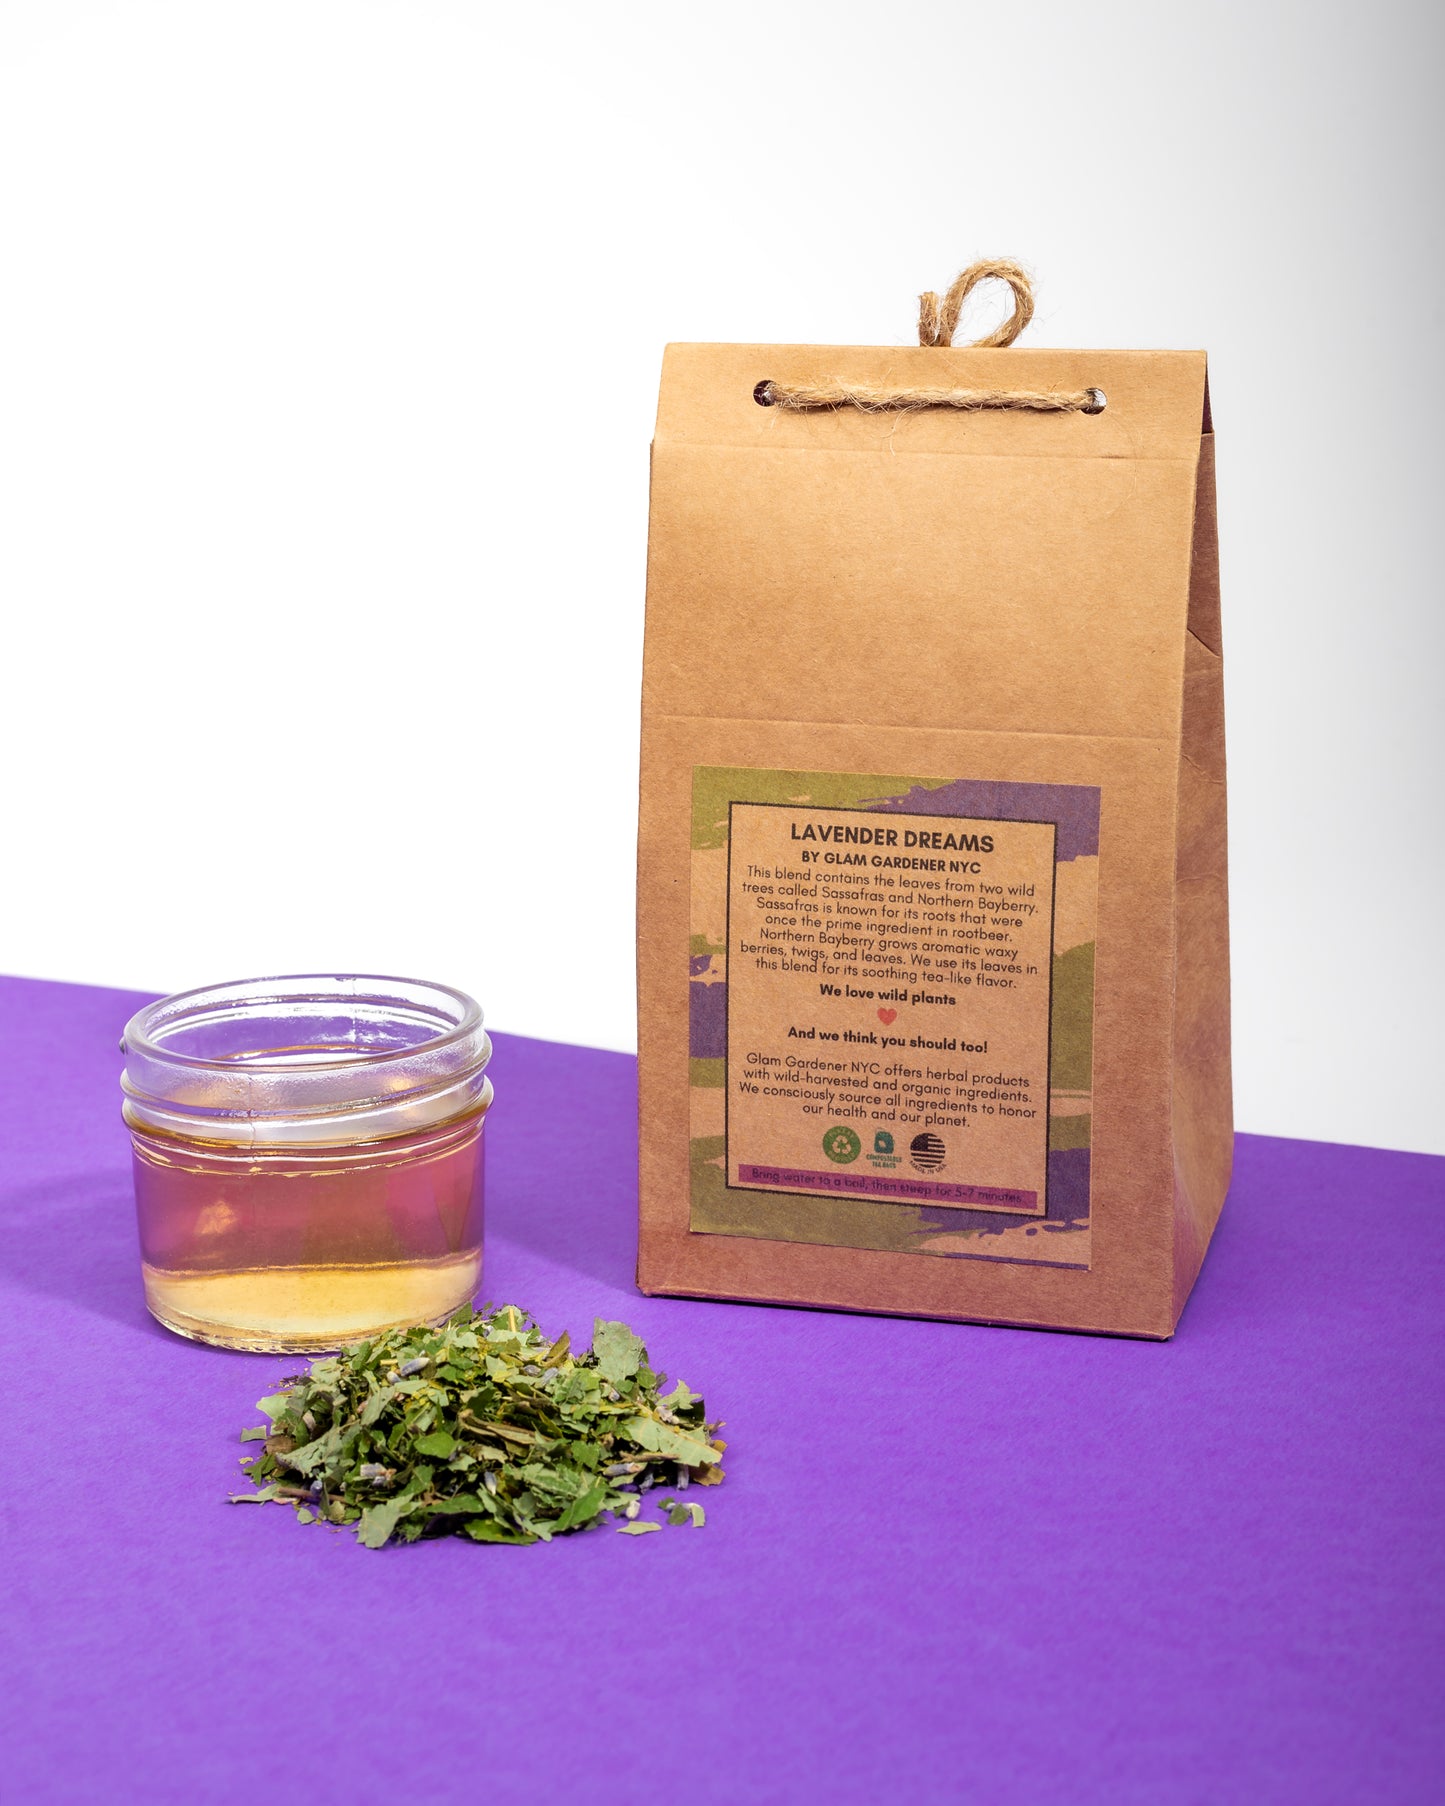 Lavender dreams bagged herbal tea (designed to soothe)